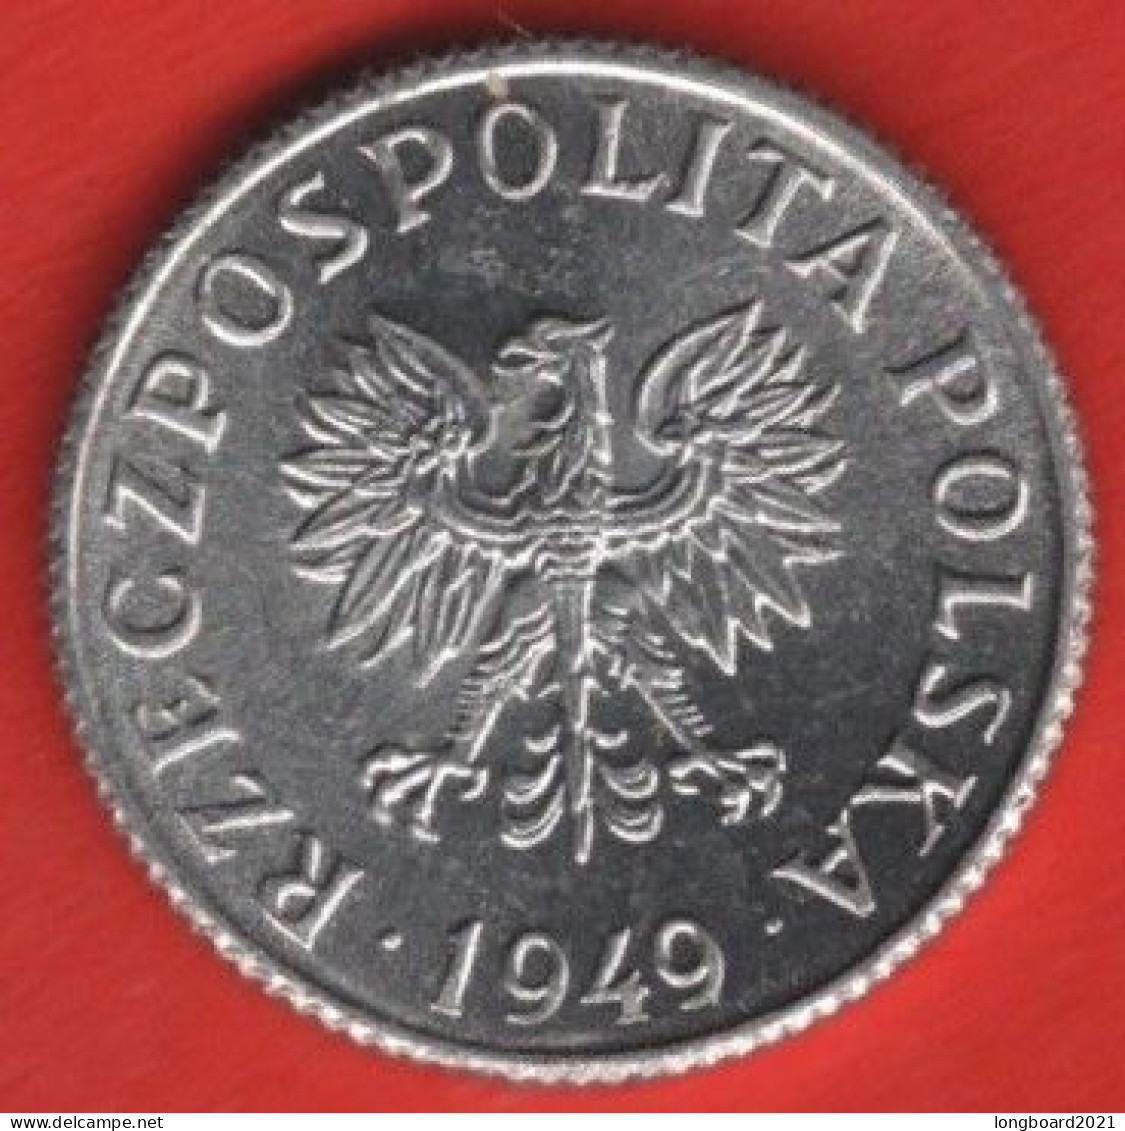 POLAND - 1 GROSZ 1949 - Poland